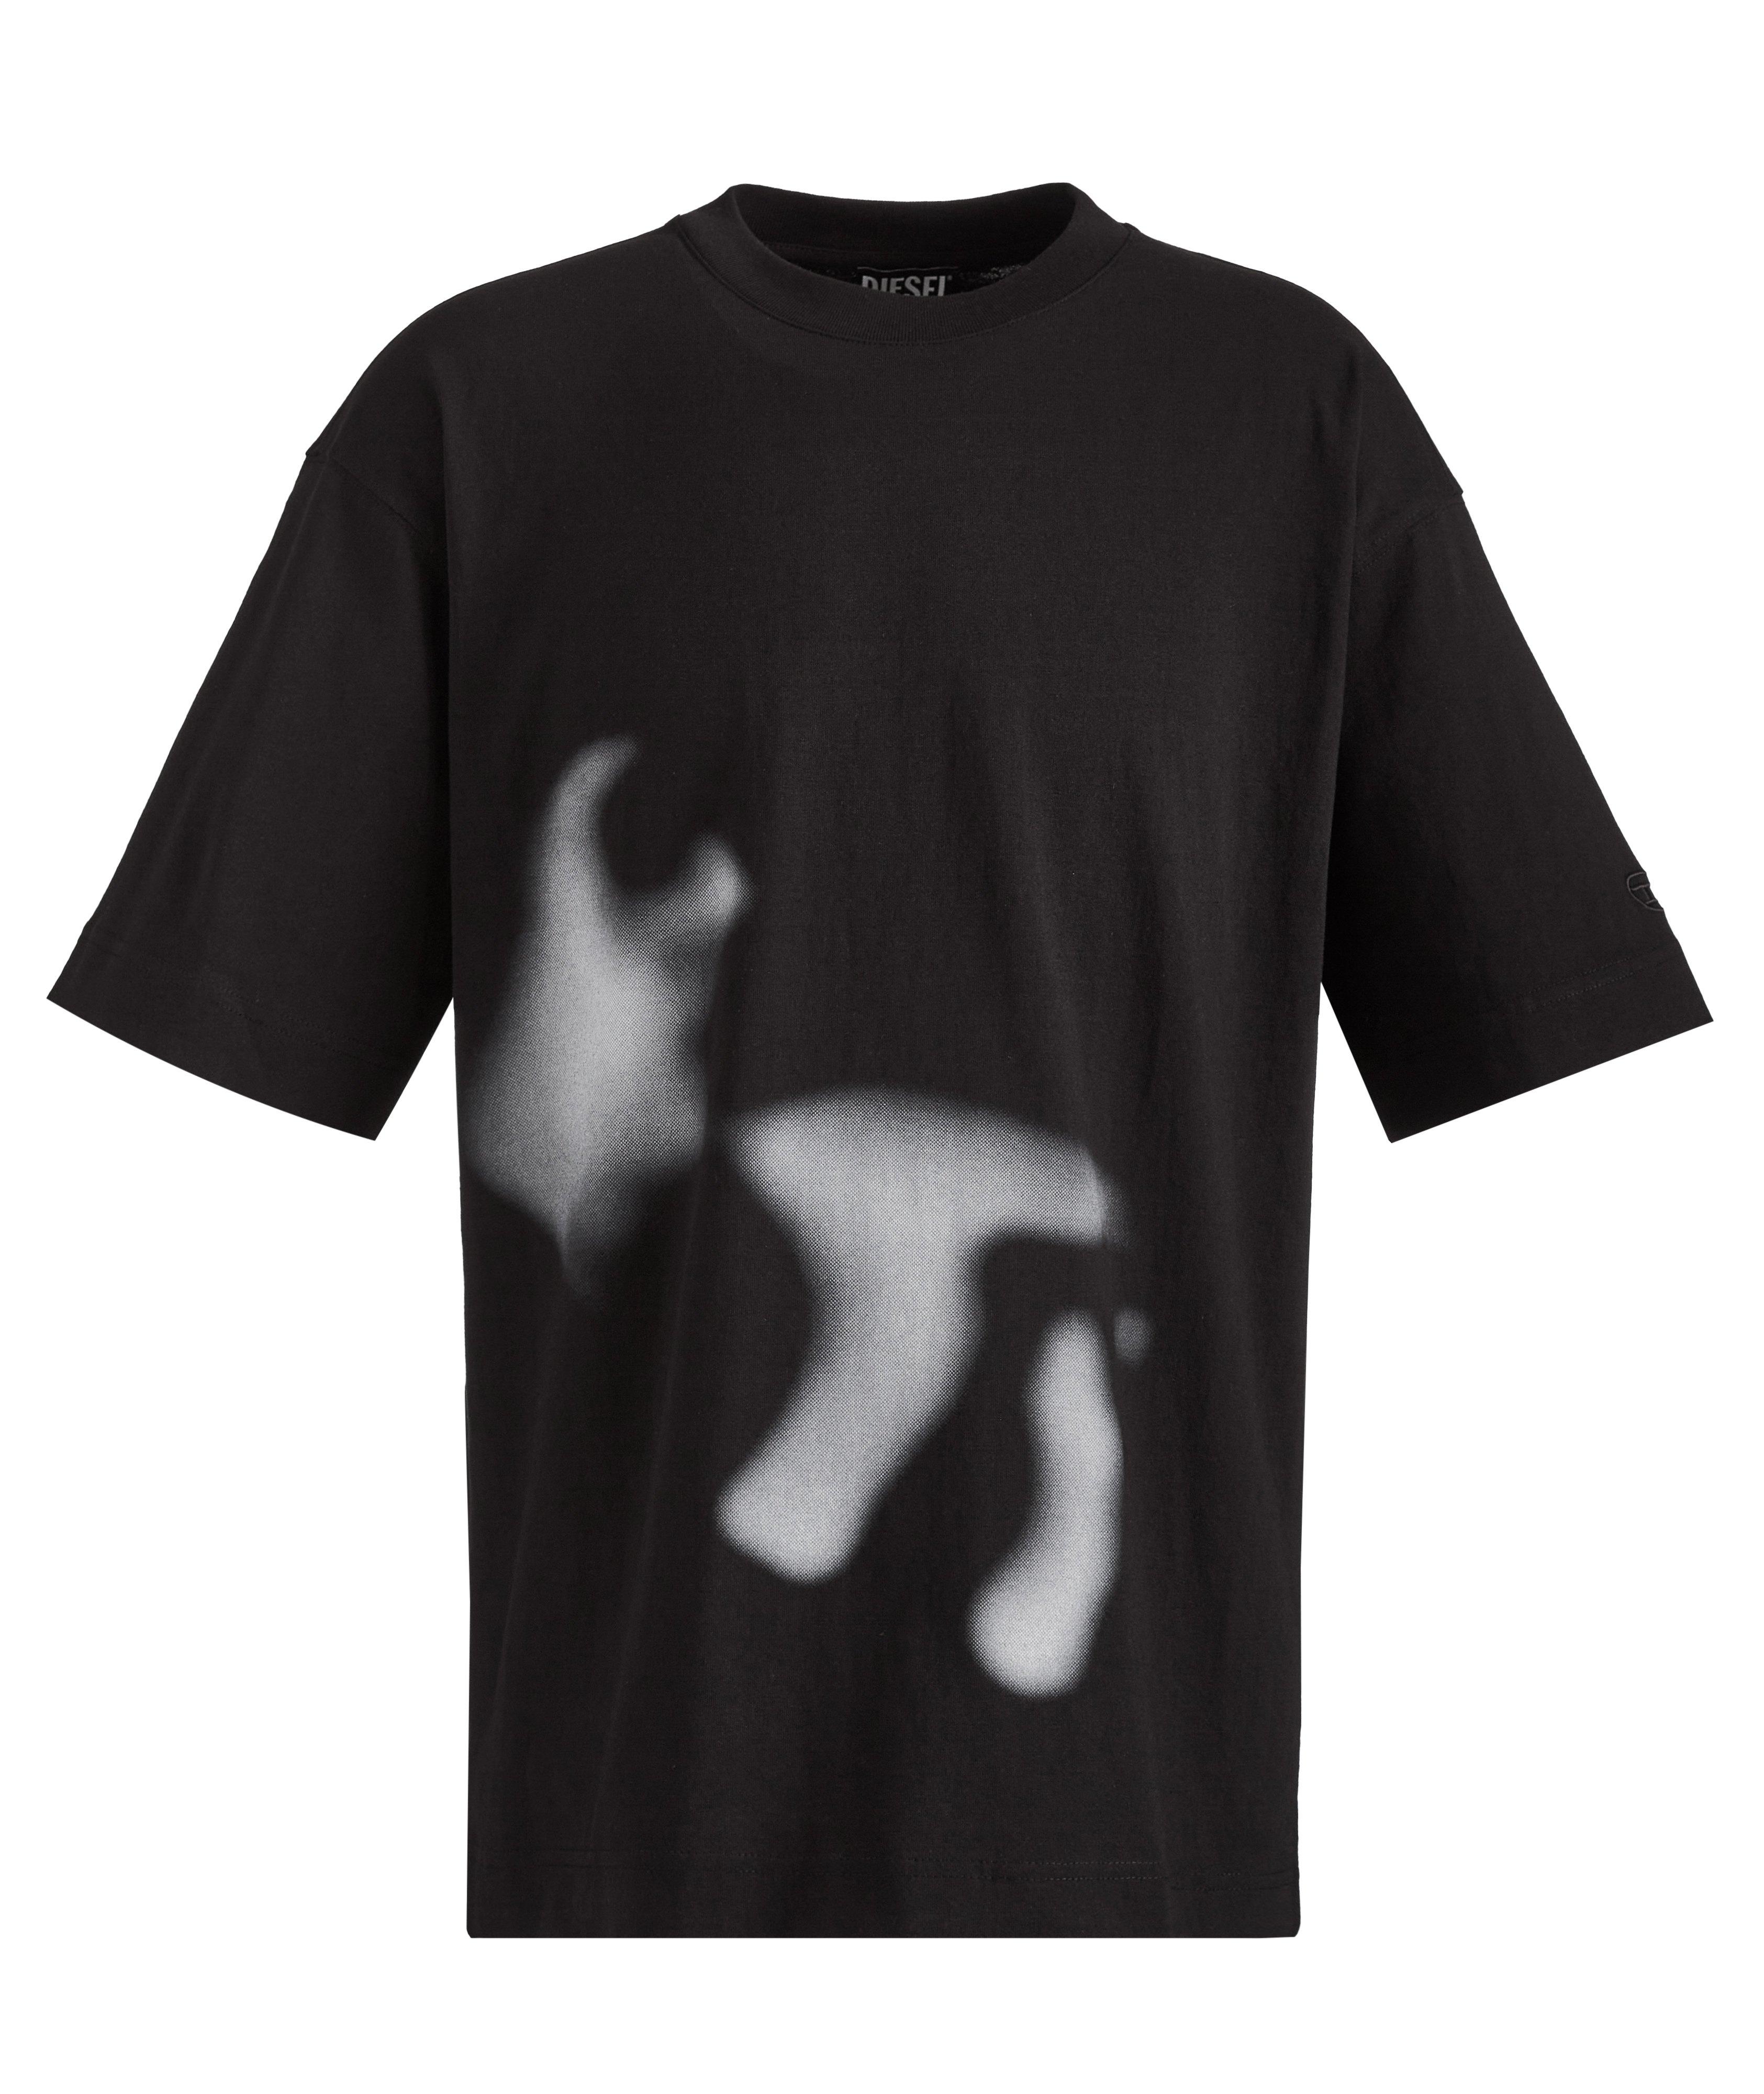 Printed Cotton T-Shirt image 0